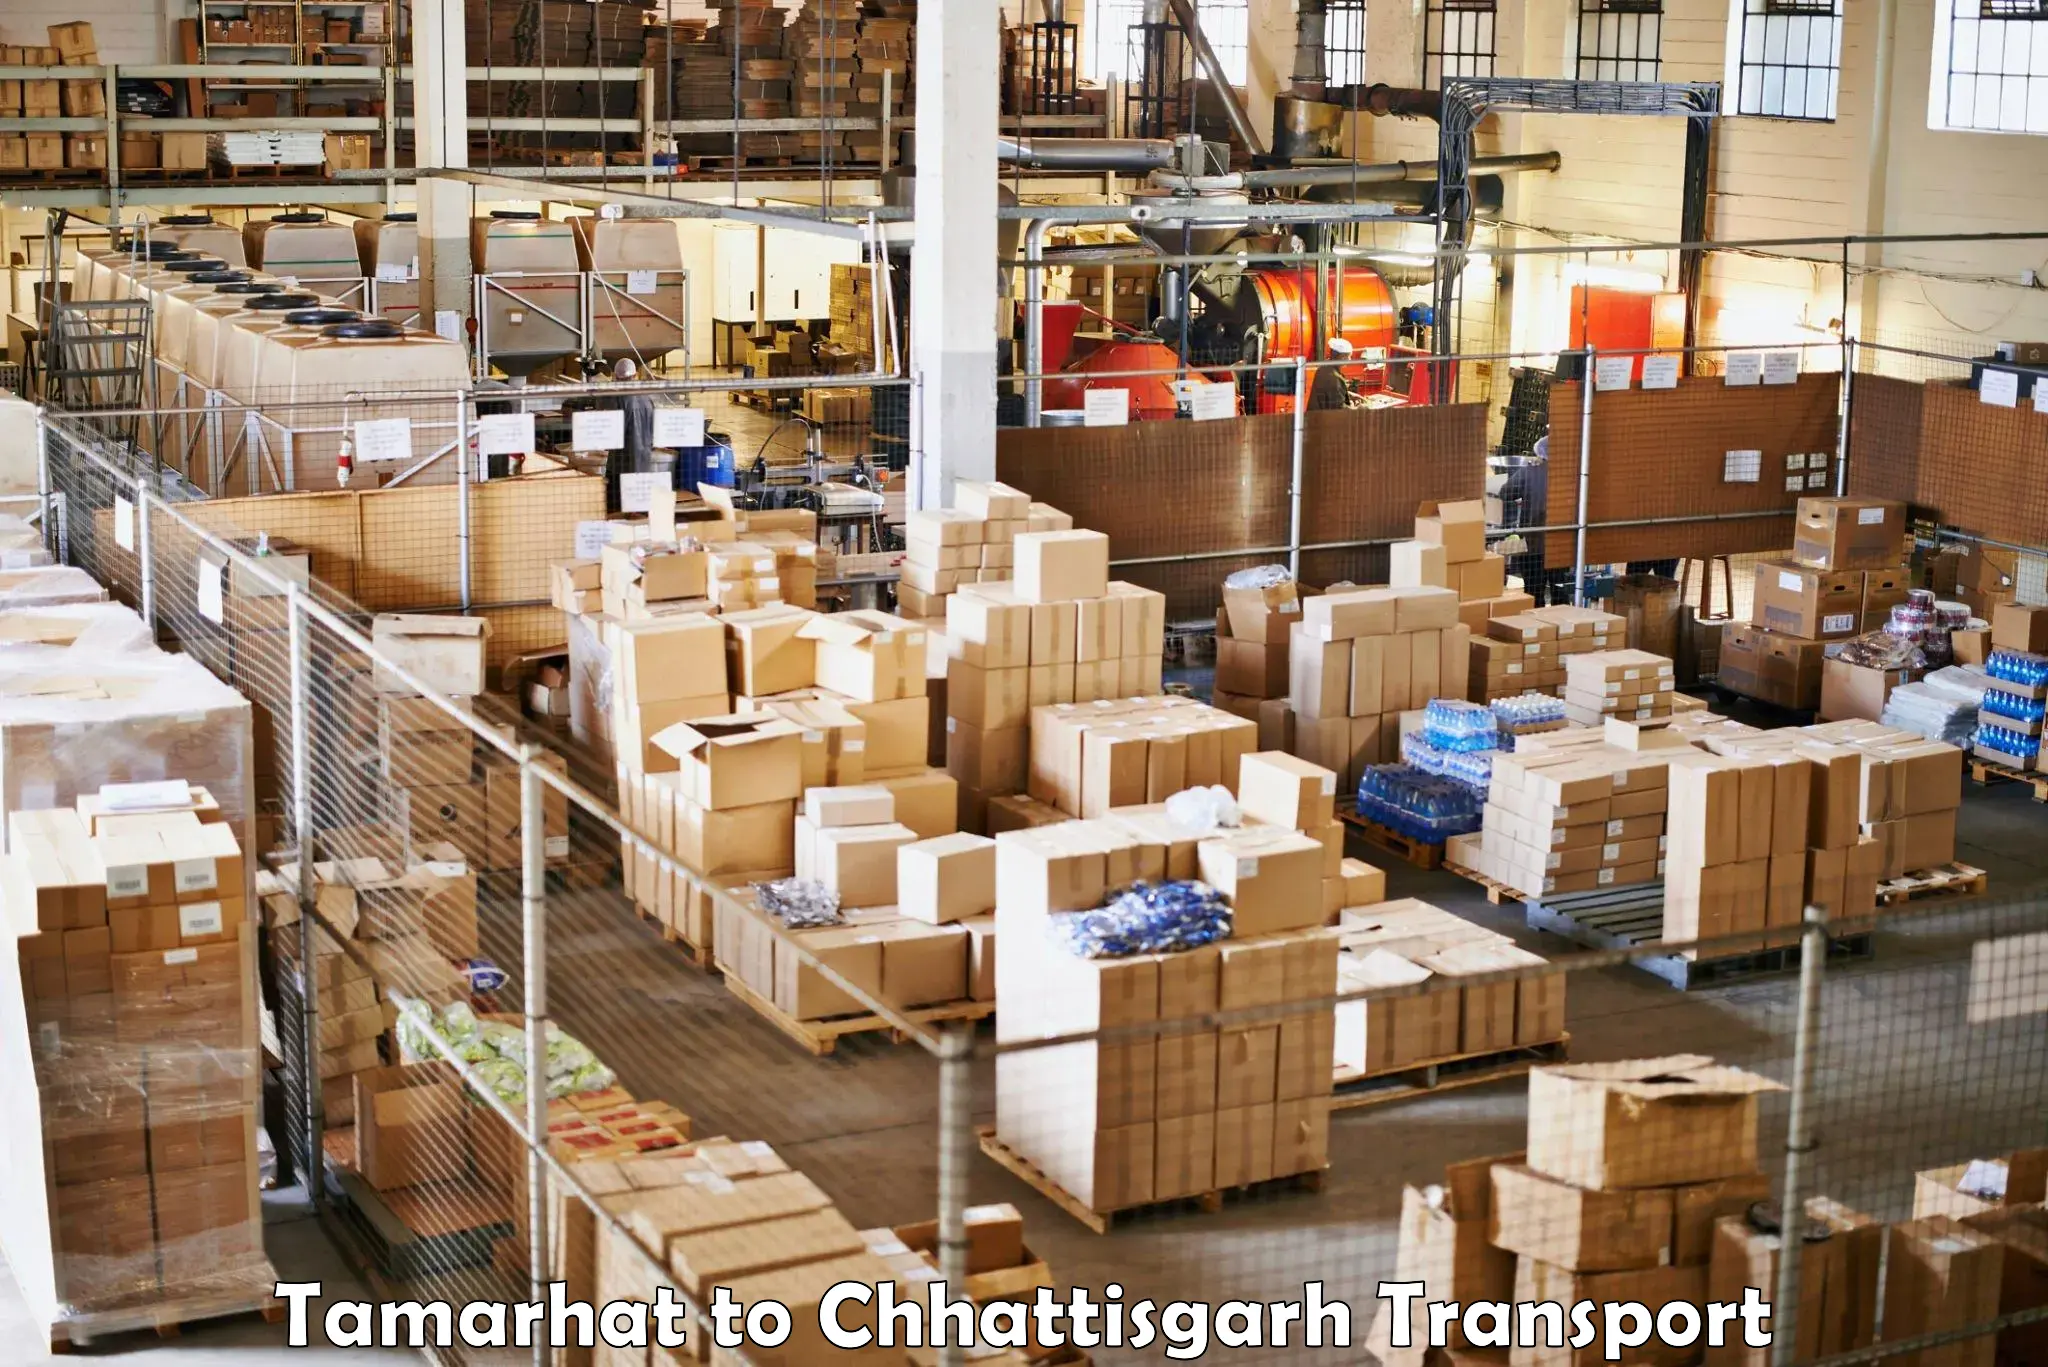 Container transportation services Tamarhat to Korea Chhattisgarh